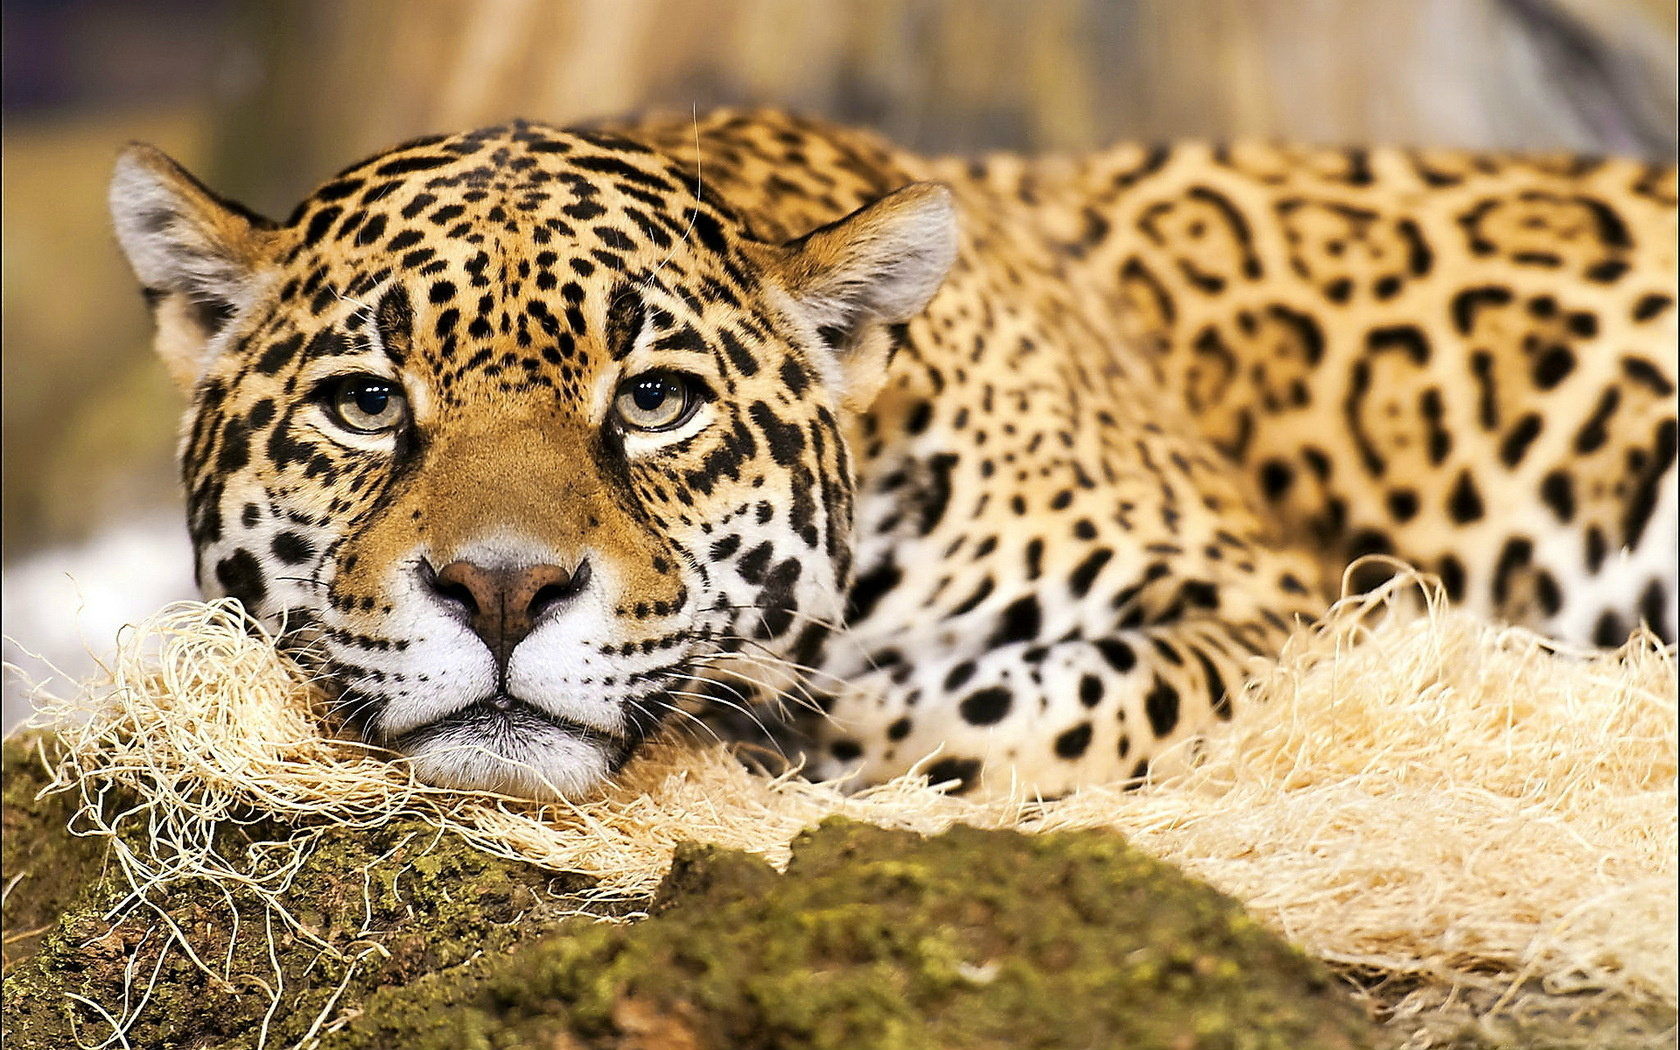 Jaguar Animal Wallpaper Pictures Image 1080p